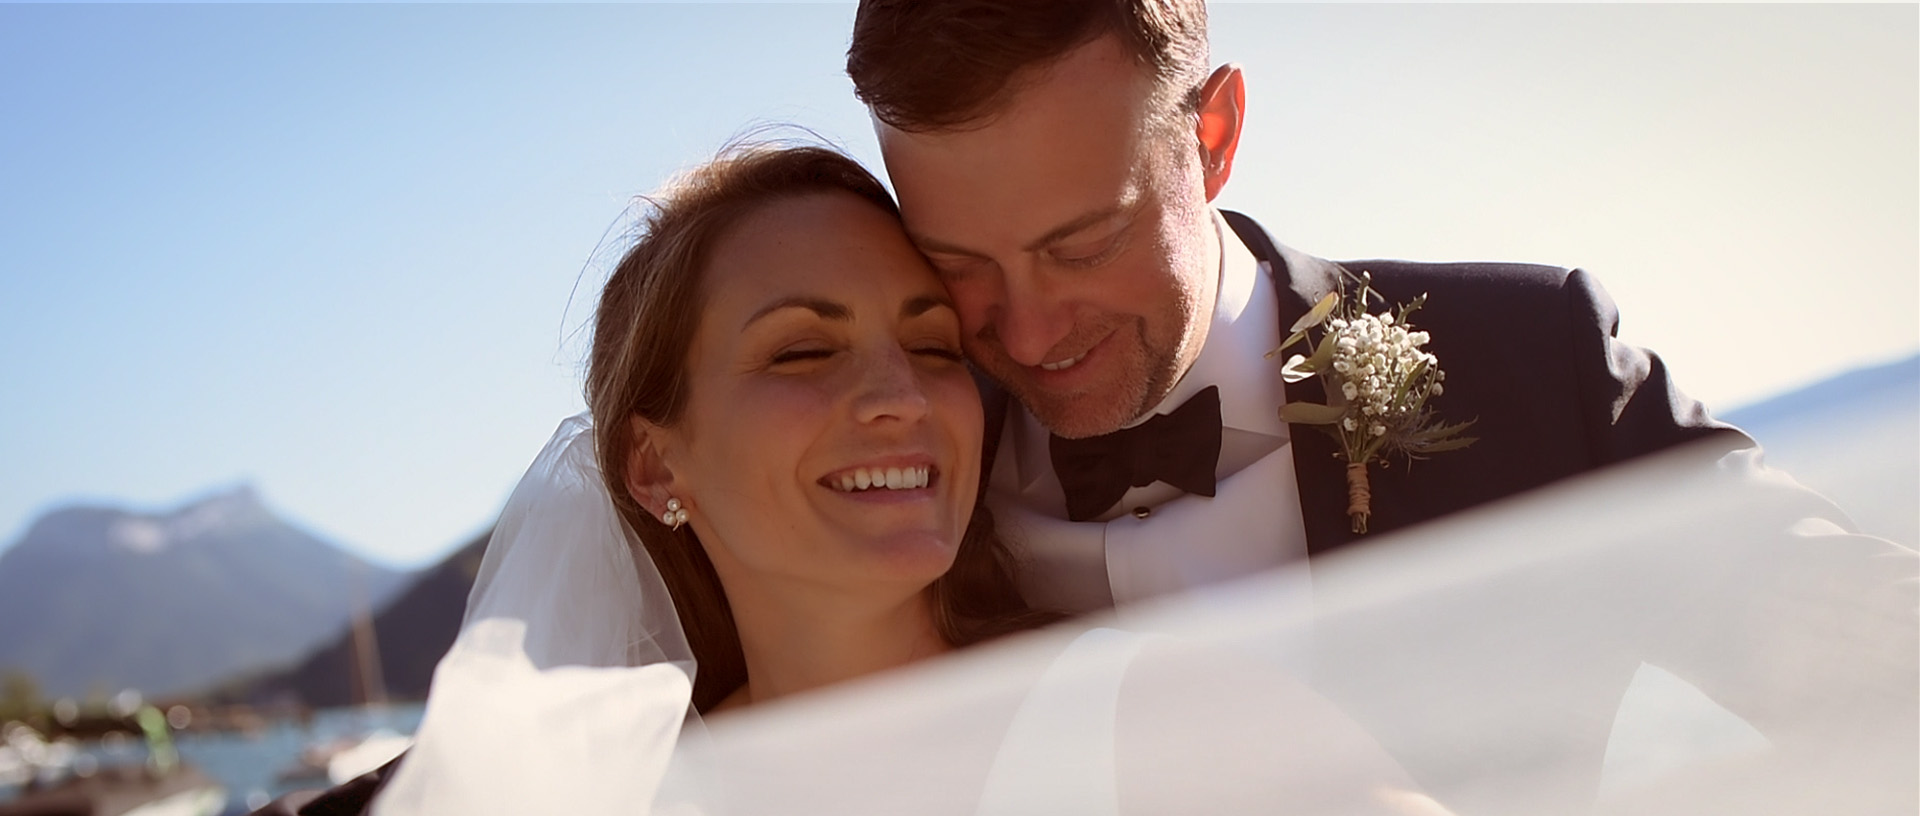 elopement videographer - elopement filmmaker - France - Lake annecy - hotel yoann conte - destination wedding